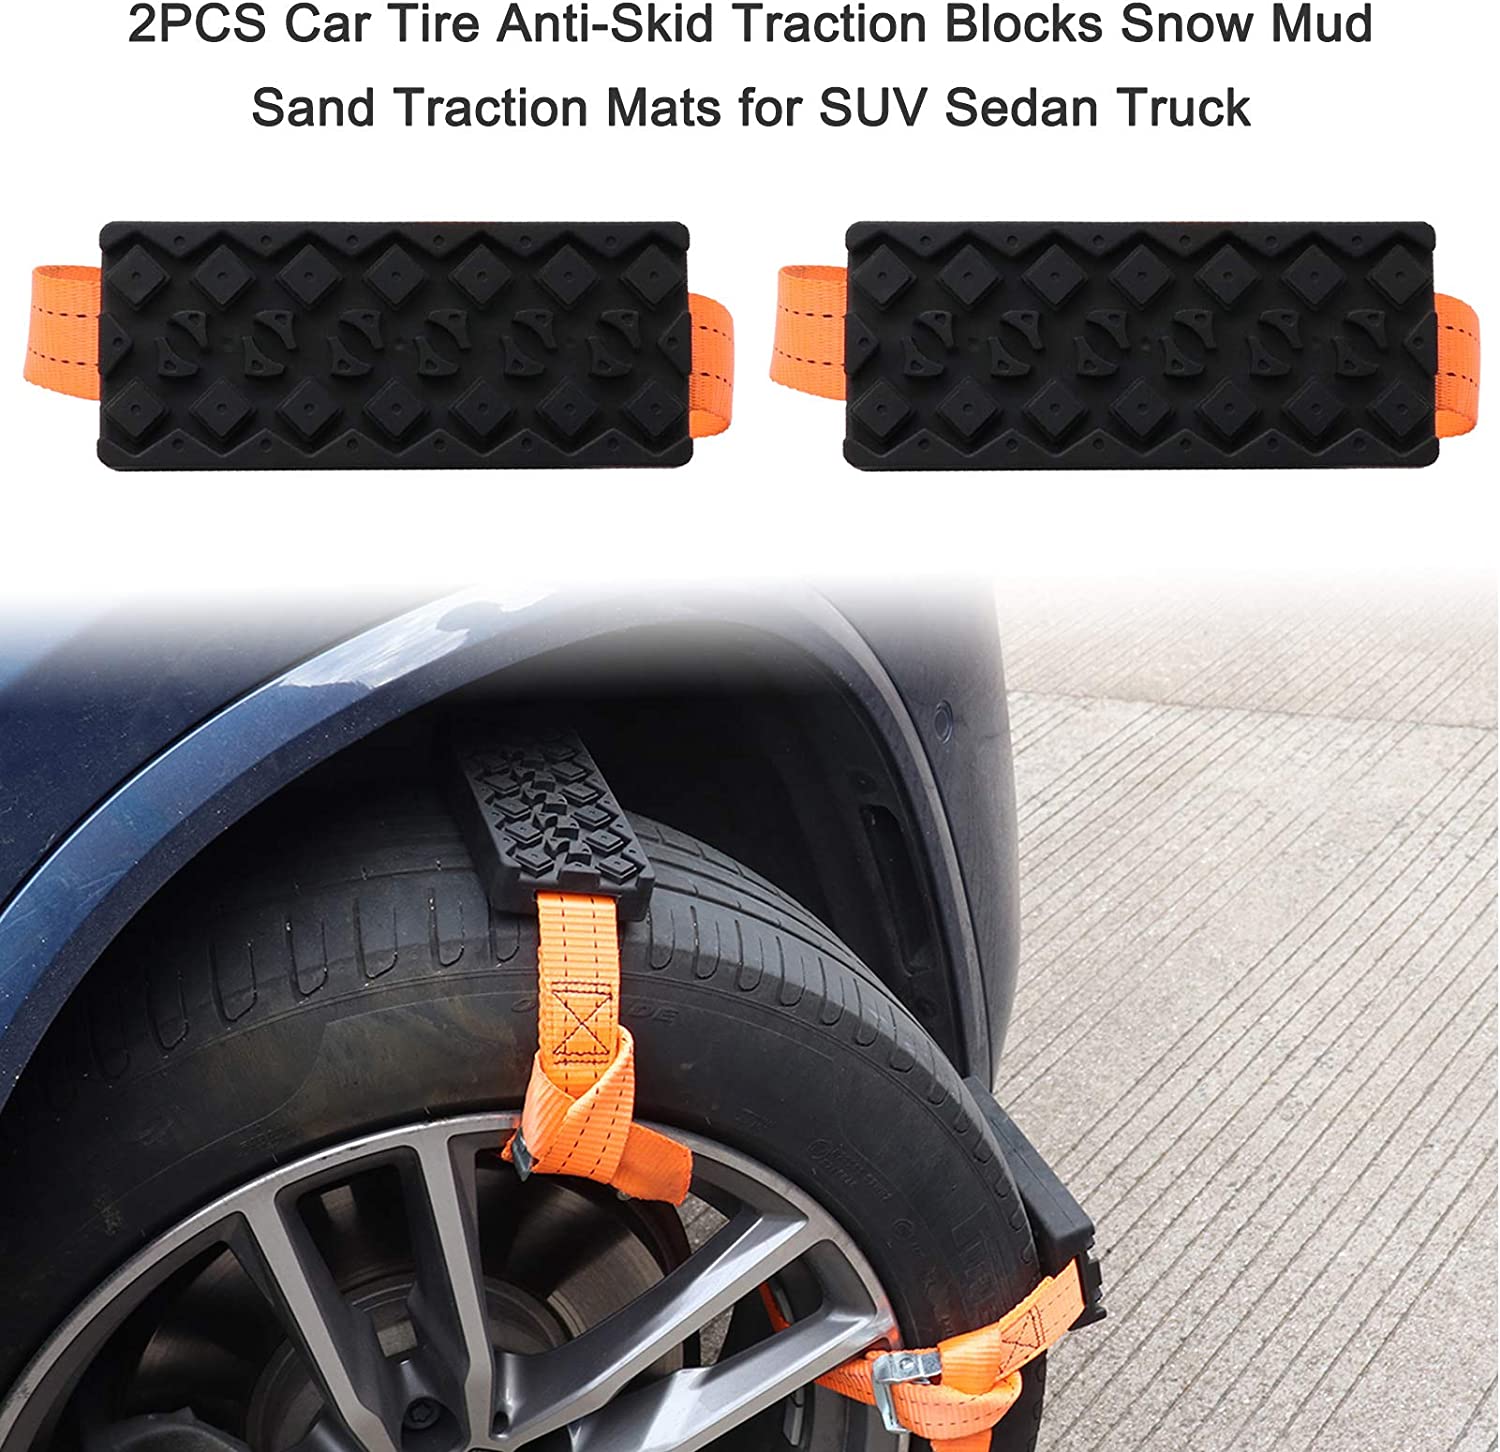 2PCS Car Tire Anti-Skid Traction Blocks Snow Mud Sand Traction Mats fo